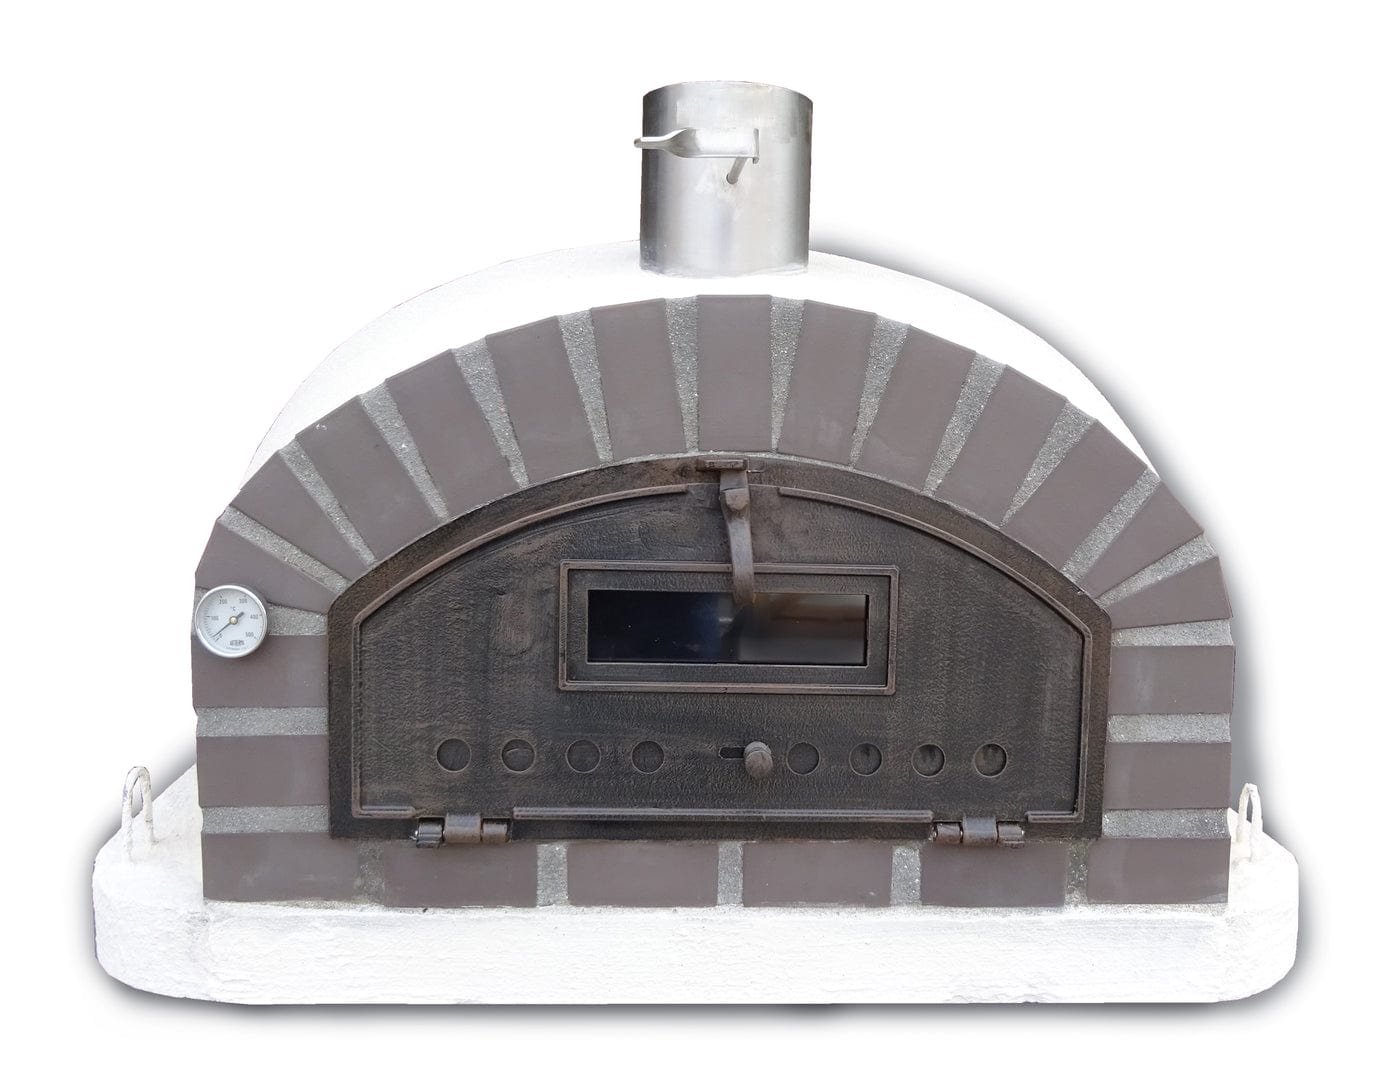 Authentic Pizza Ovens Pizza Ovens Authentic Pizza Ovens ‘Lume Largo’ Premium Wood-Fired Pizza Oven / Handmade, Brick, Bake, Roast / LUMELARGO